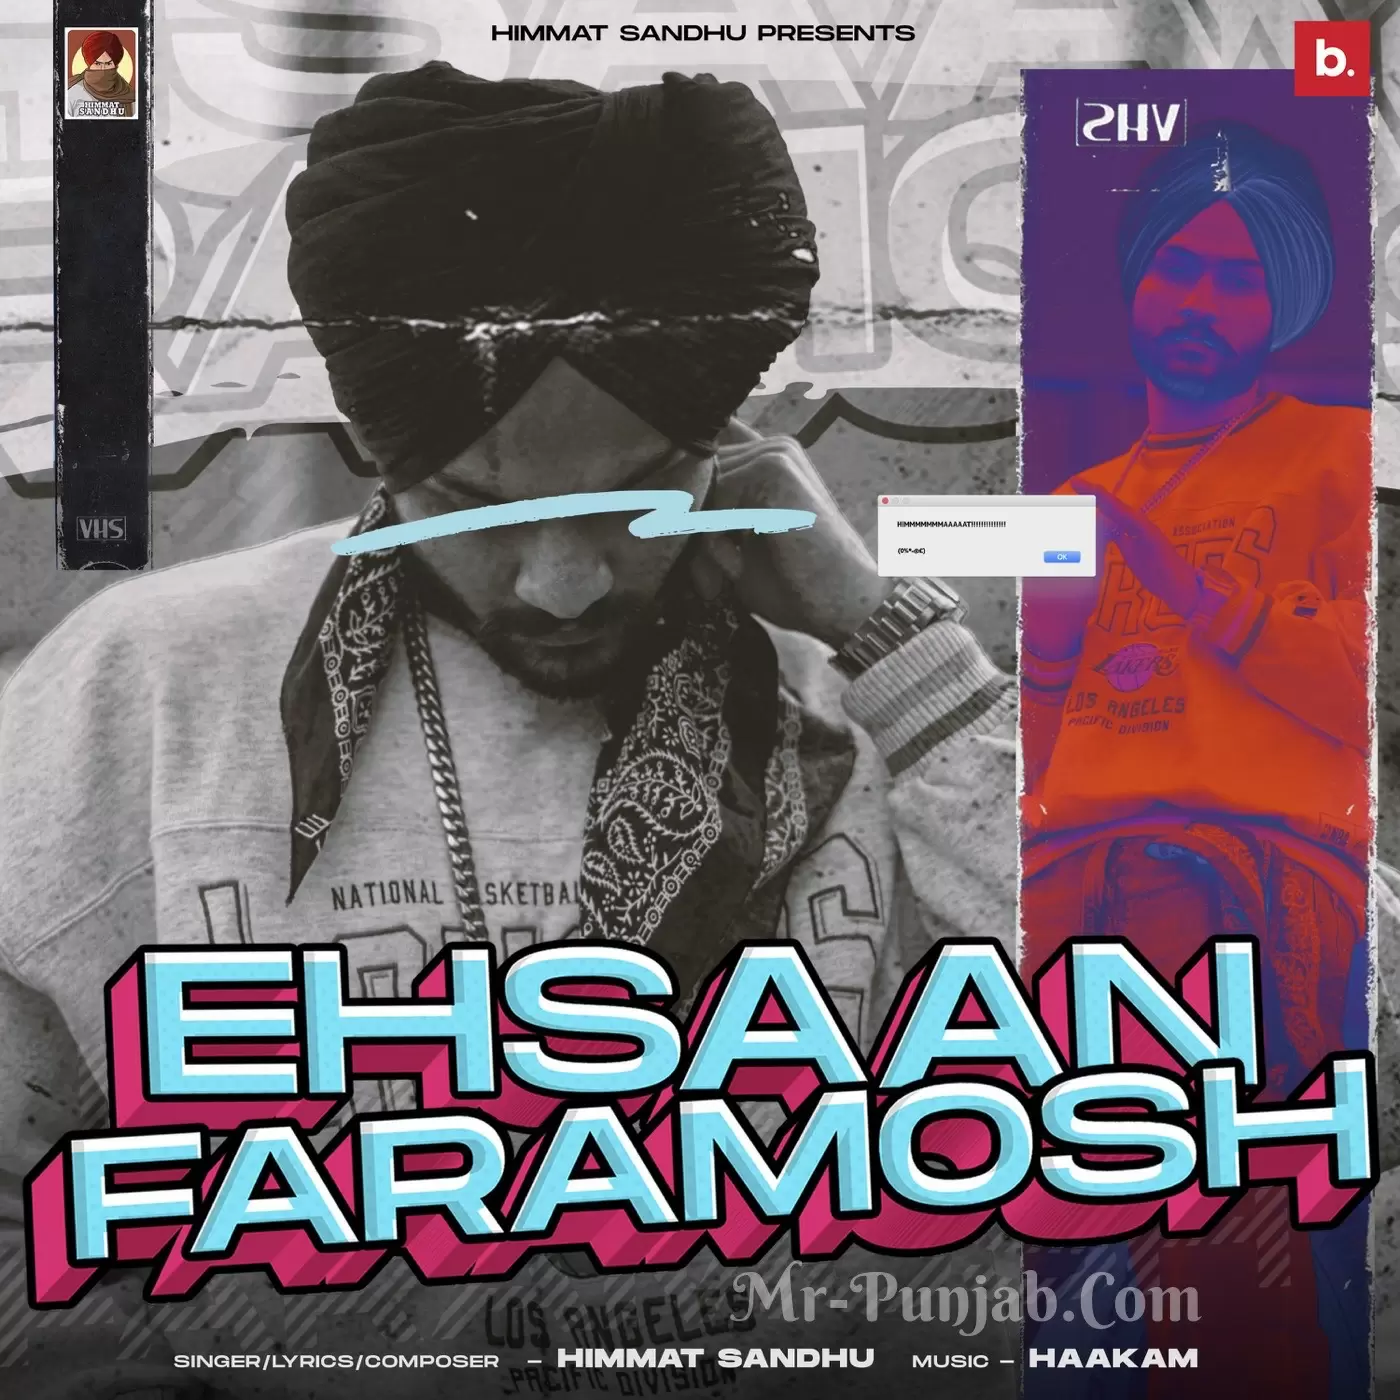 Ehsaan Faramosh Himmat Sandhu Mp3 Download Song - Mr-Punjab